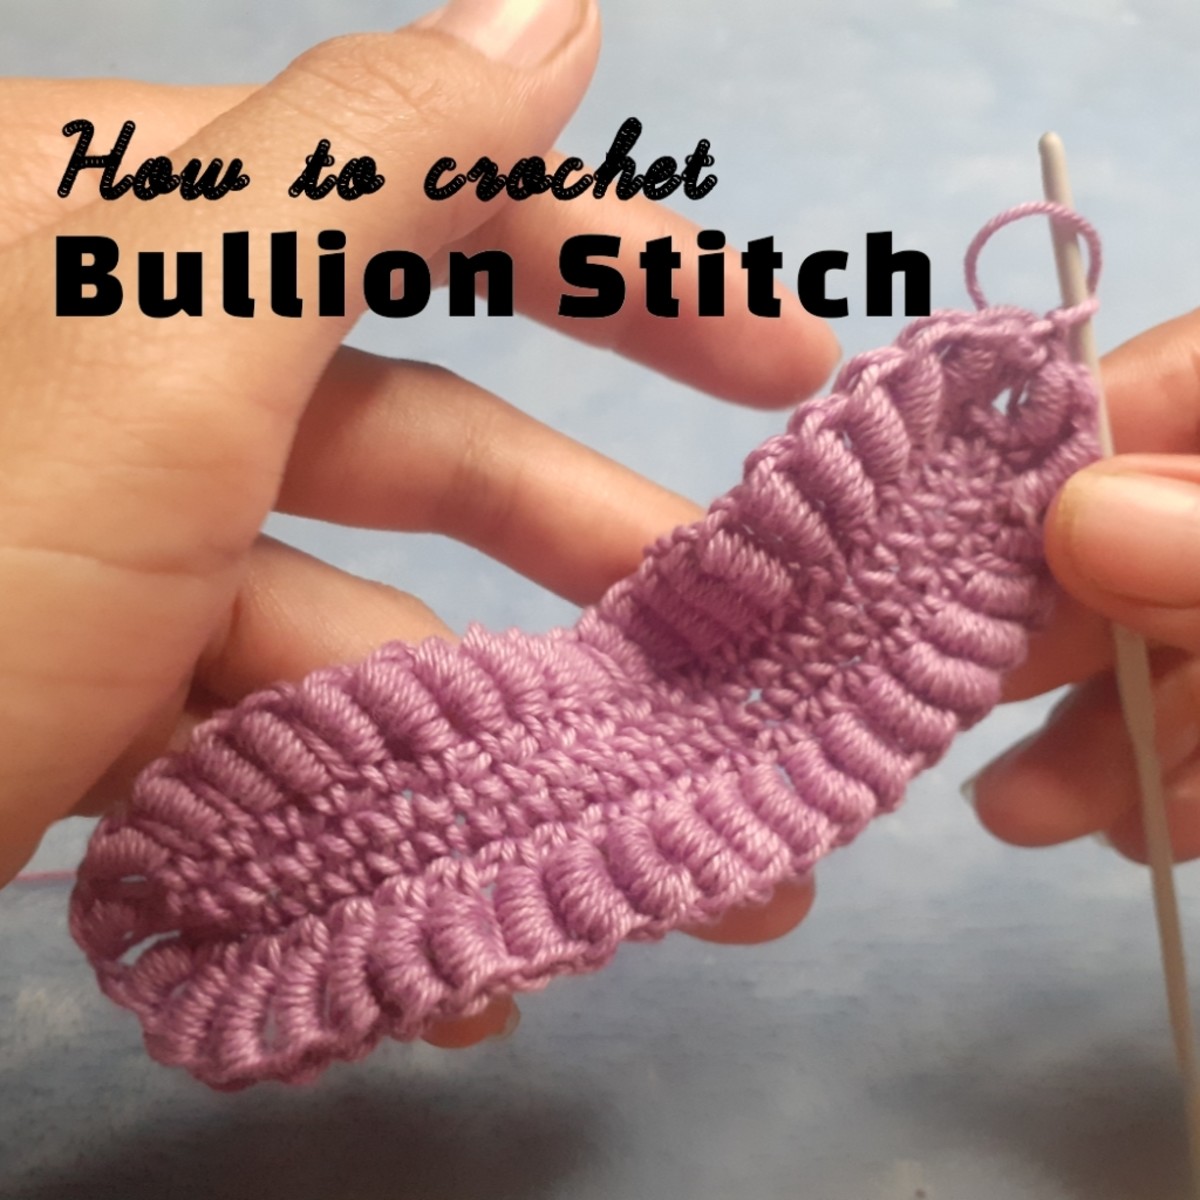 How to Crochet Bullion Stitch